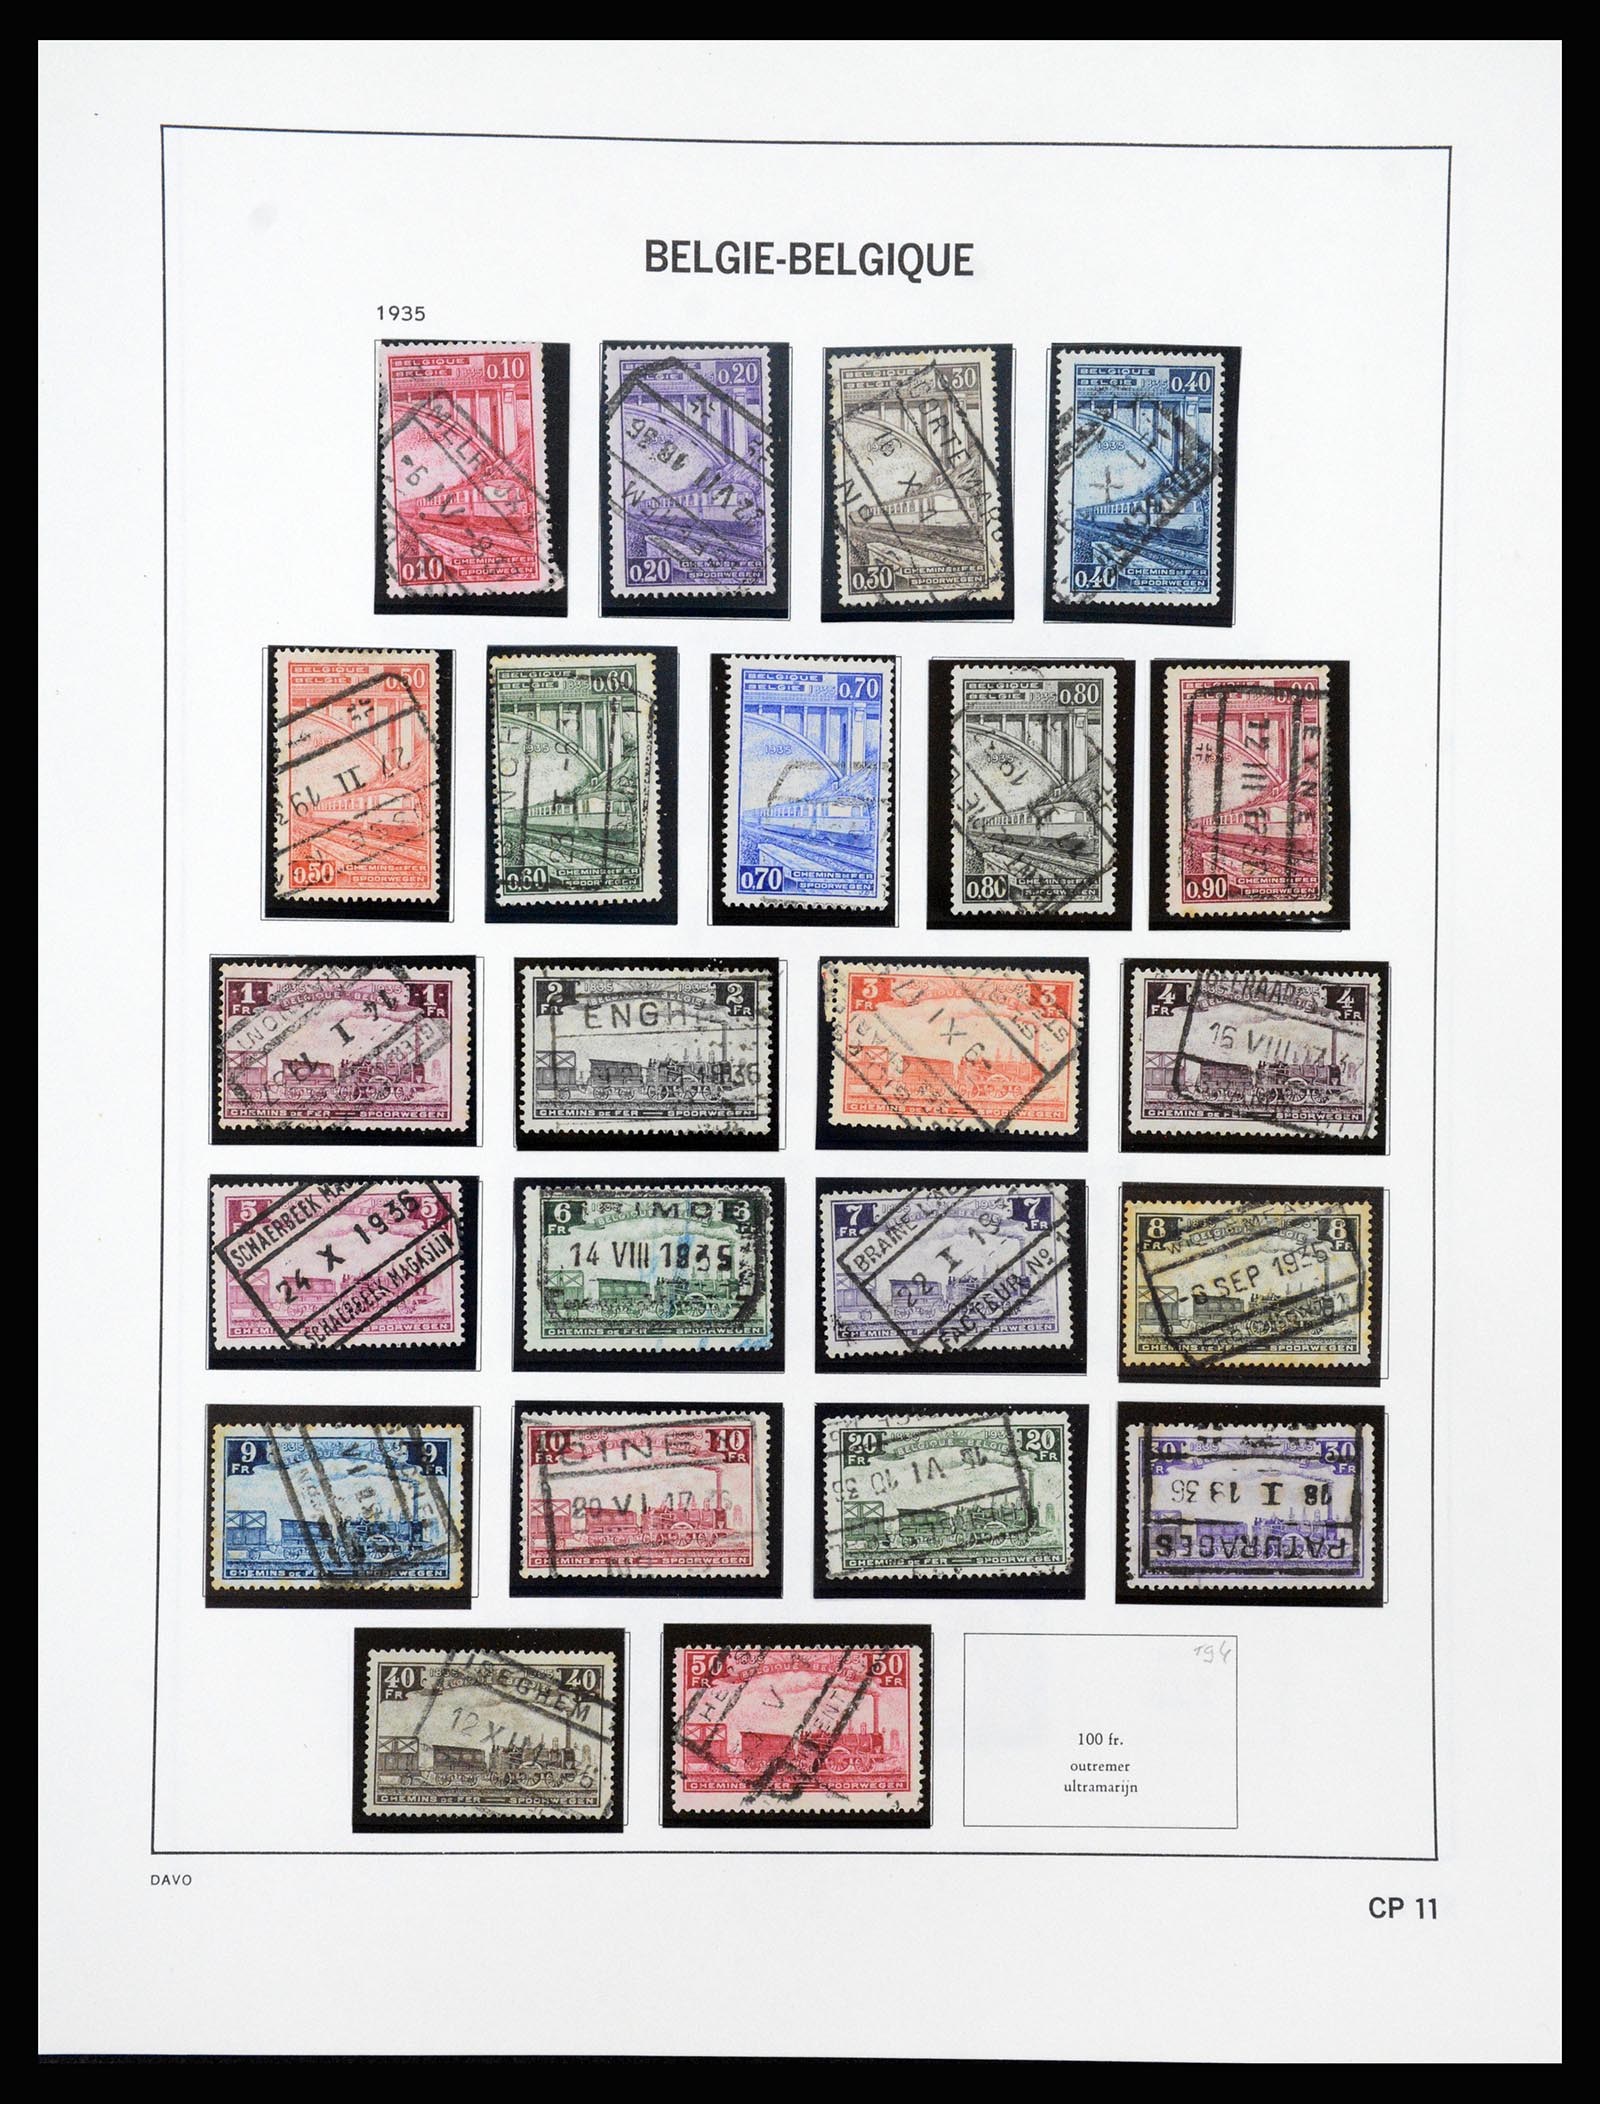 37189 442 - Stamp collection 37189 Belgium 1849-2006.